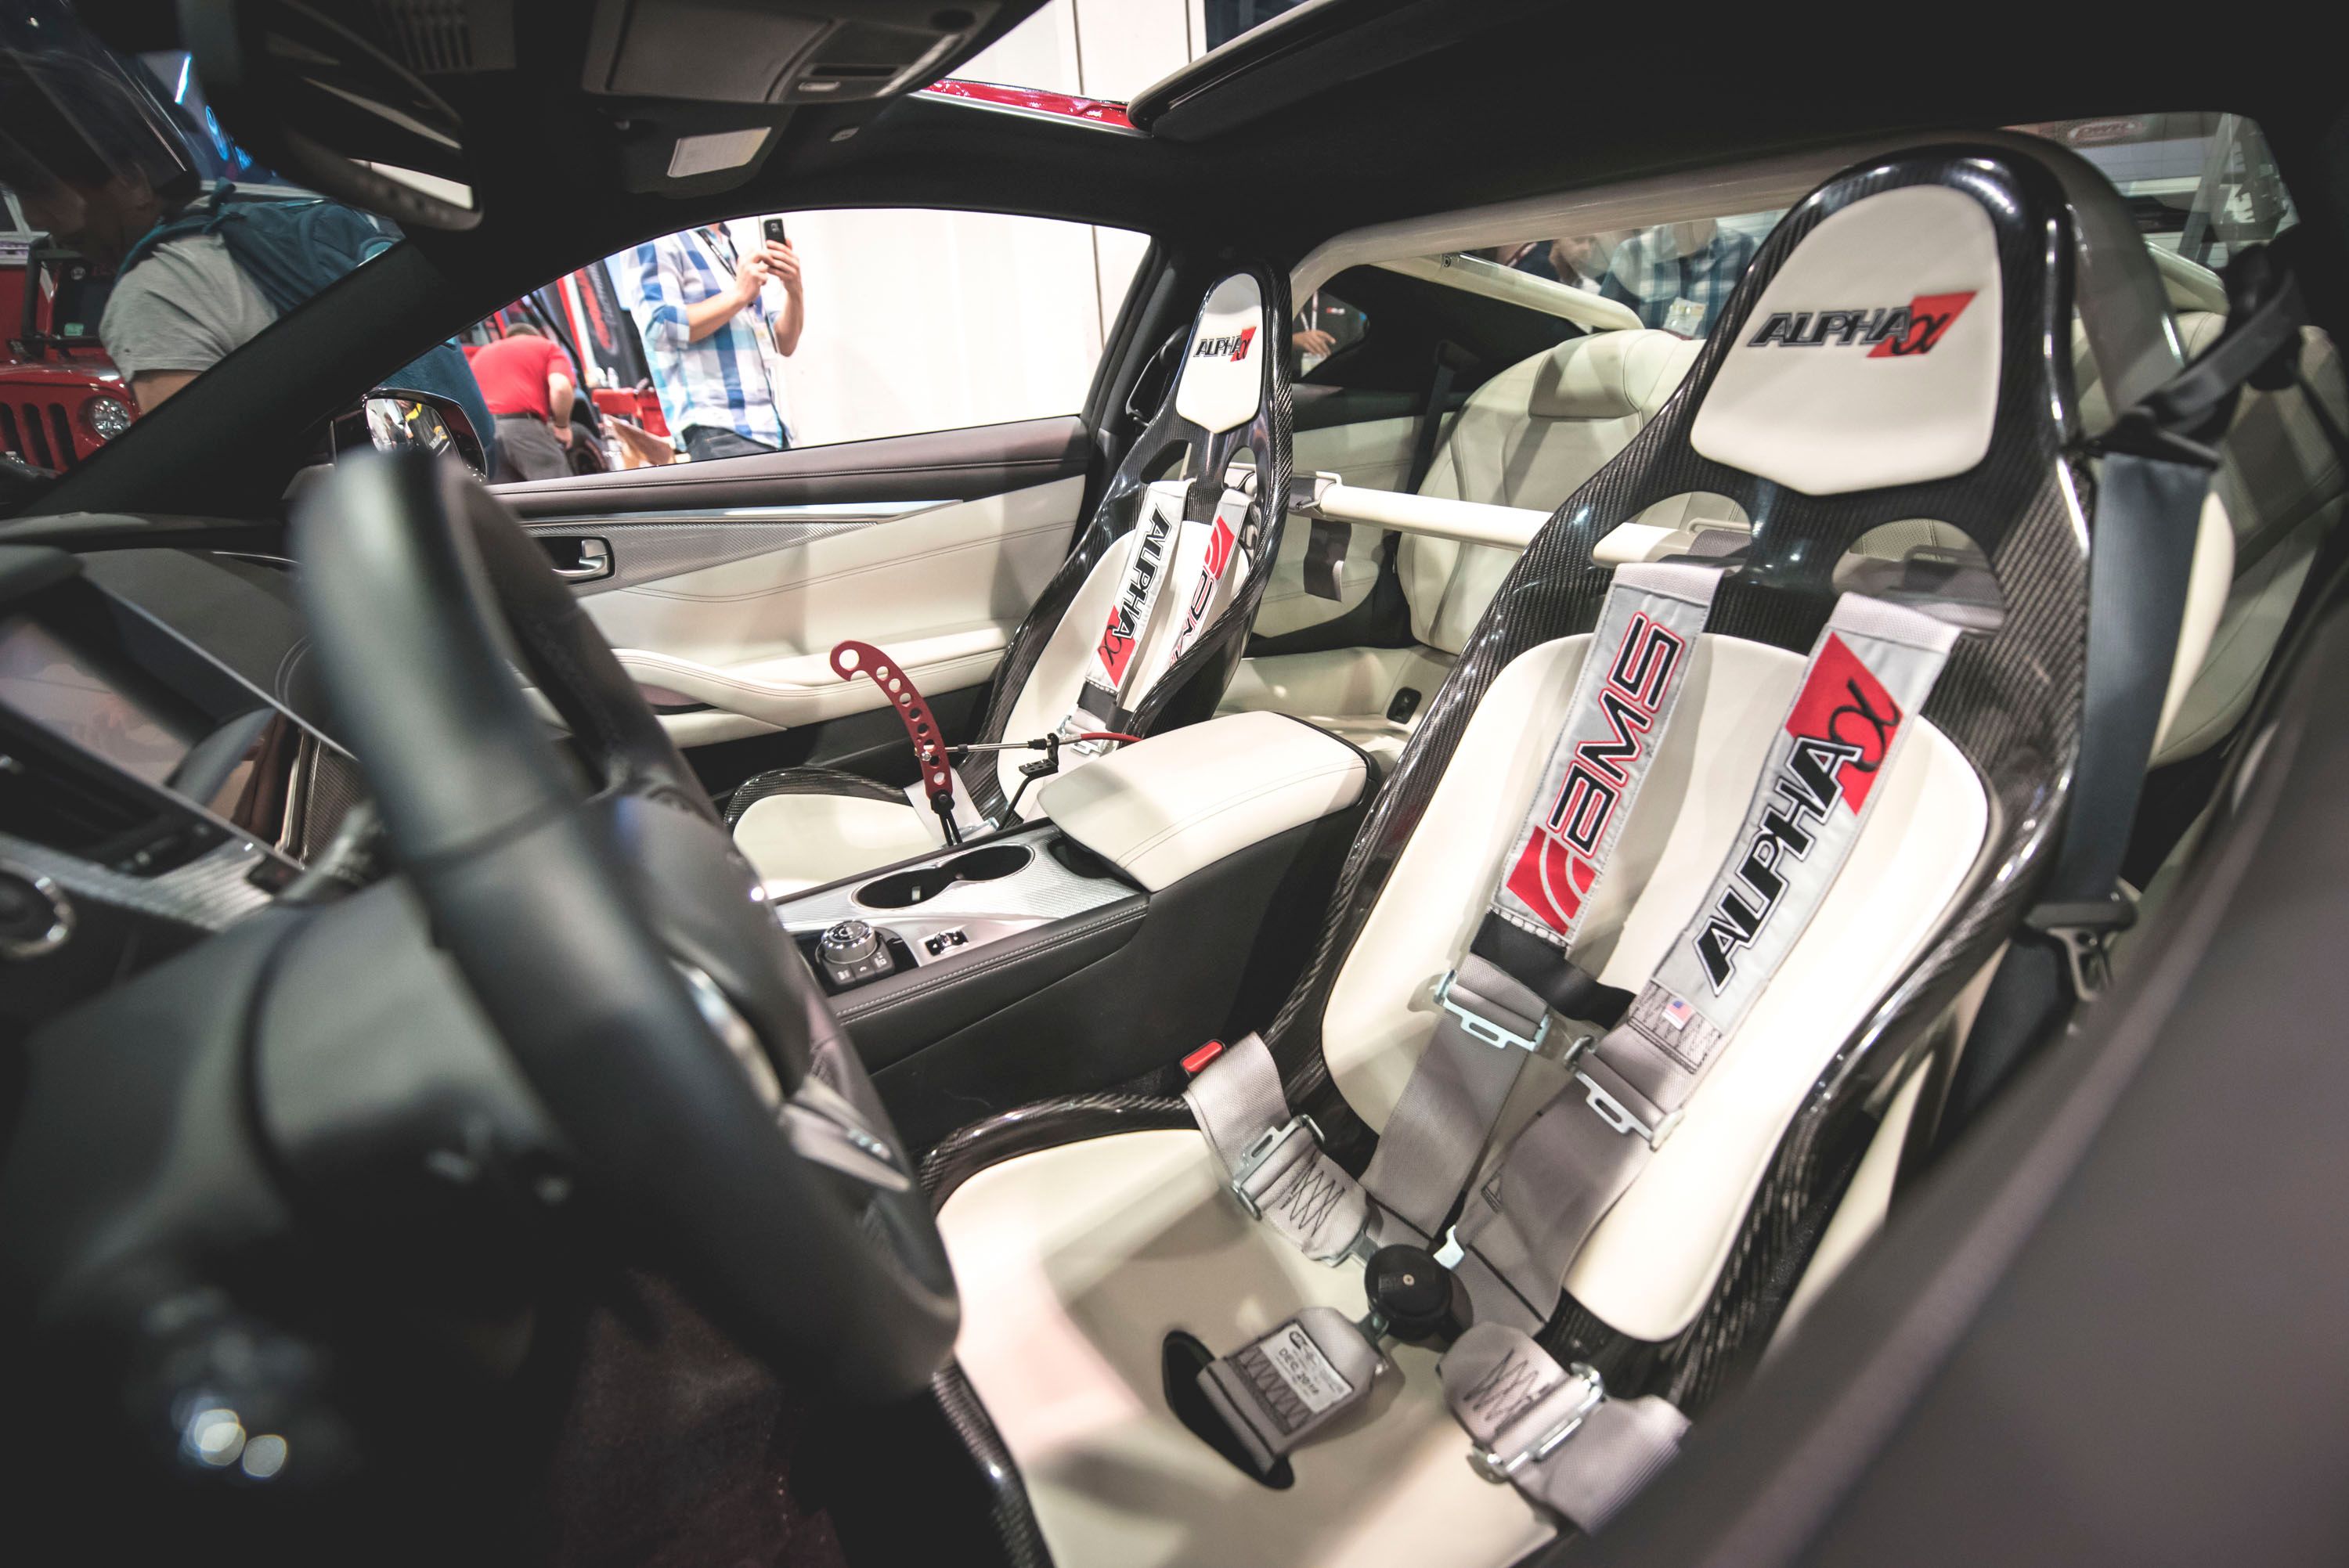 Carbon fiber racing seats